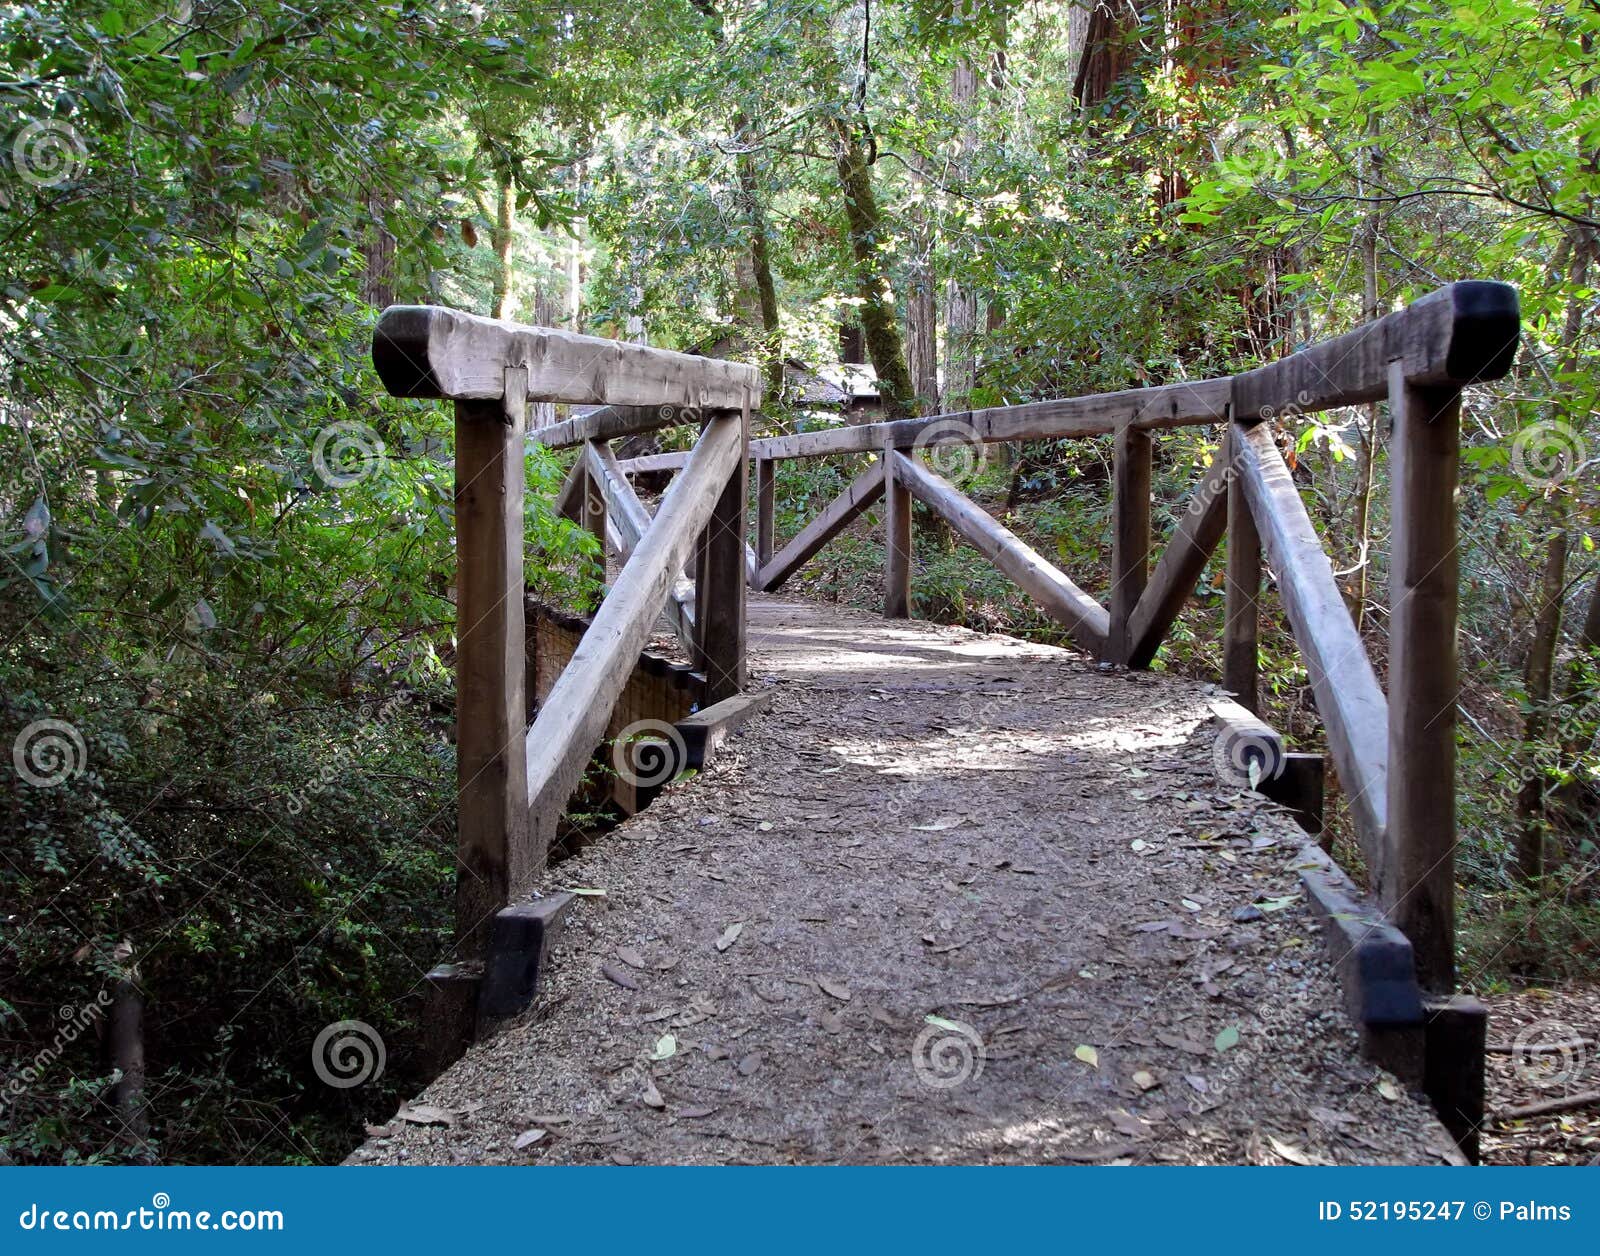 big basin redwoods park bridge